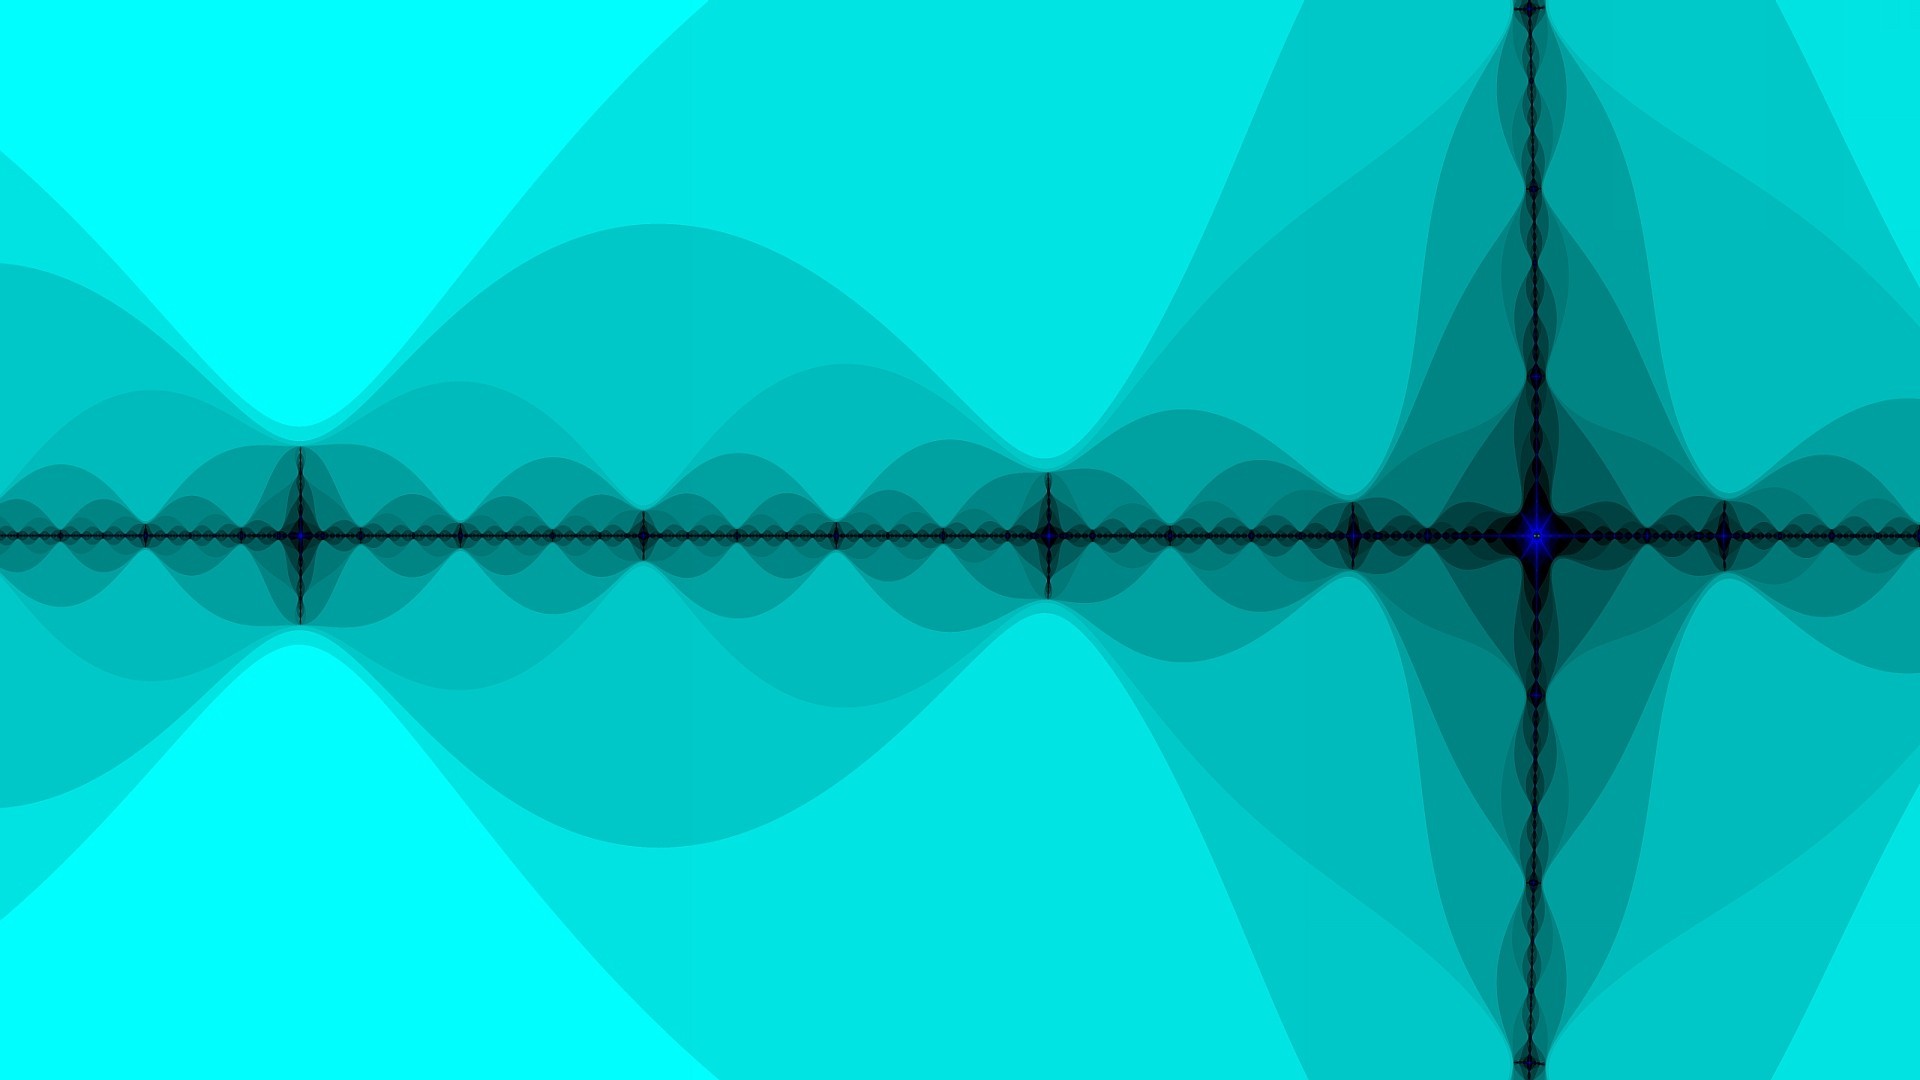 Sound Waves Wallpaper